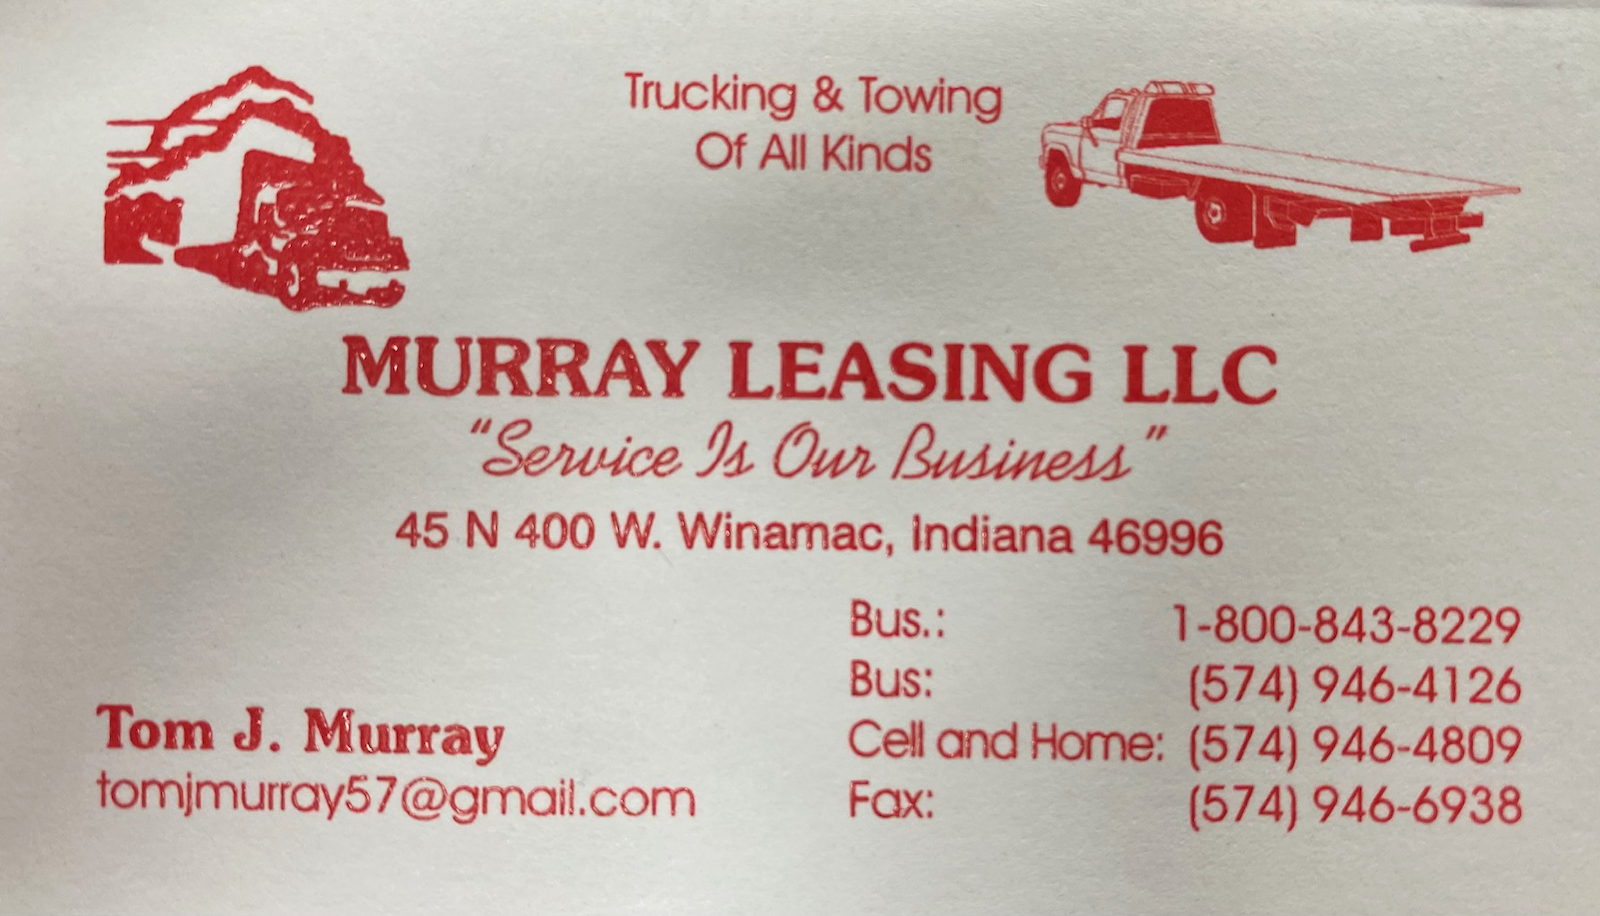 Murray Leasing LLC